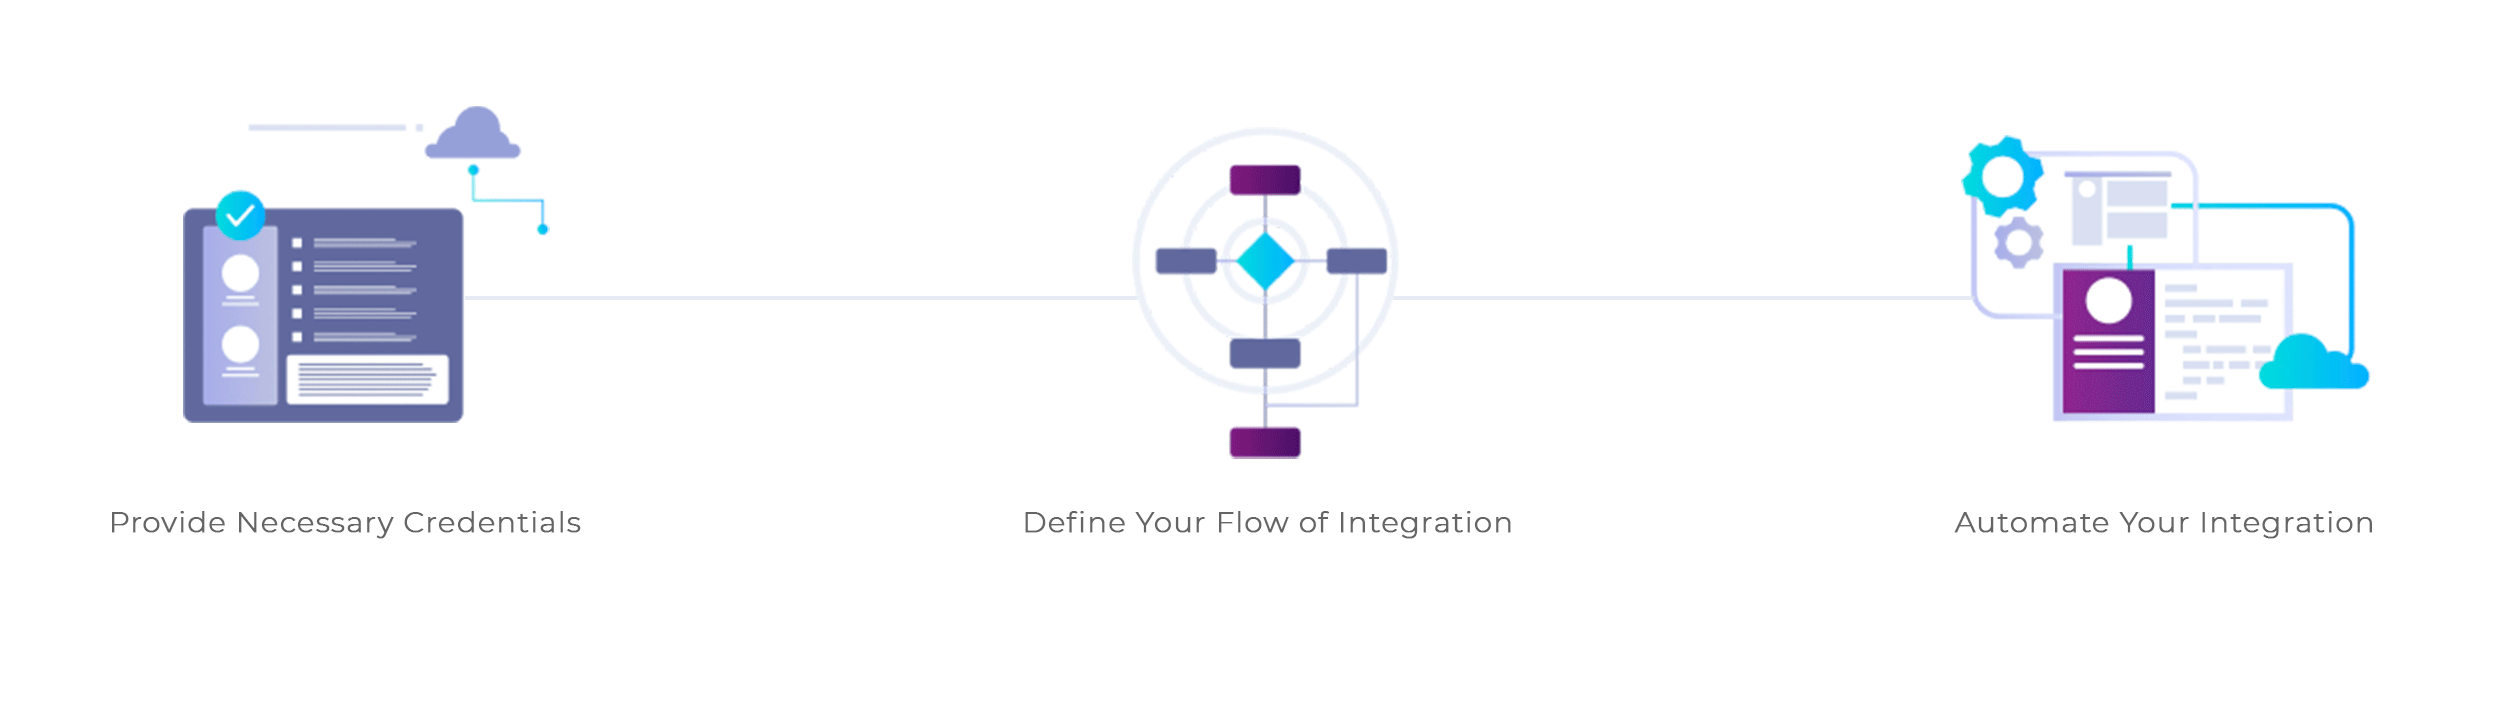 Integration workflow